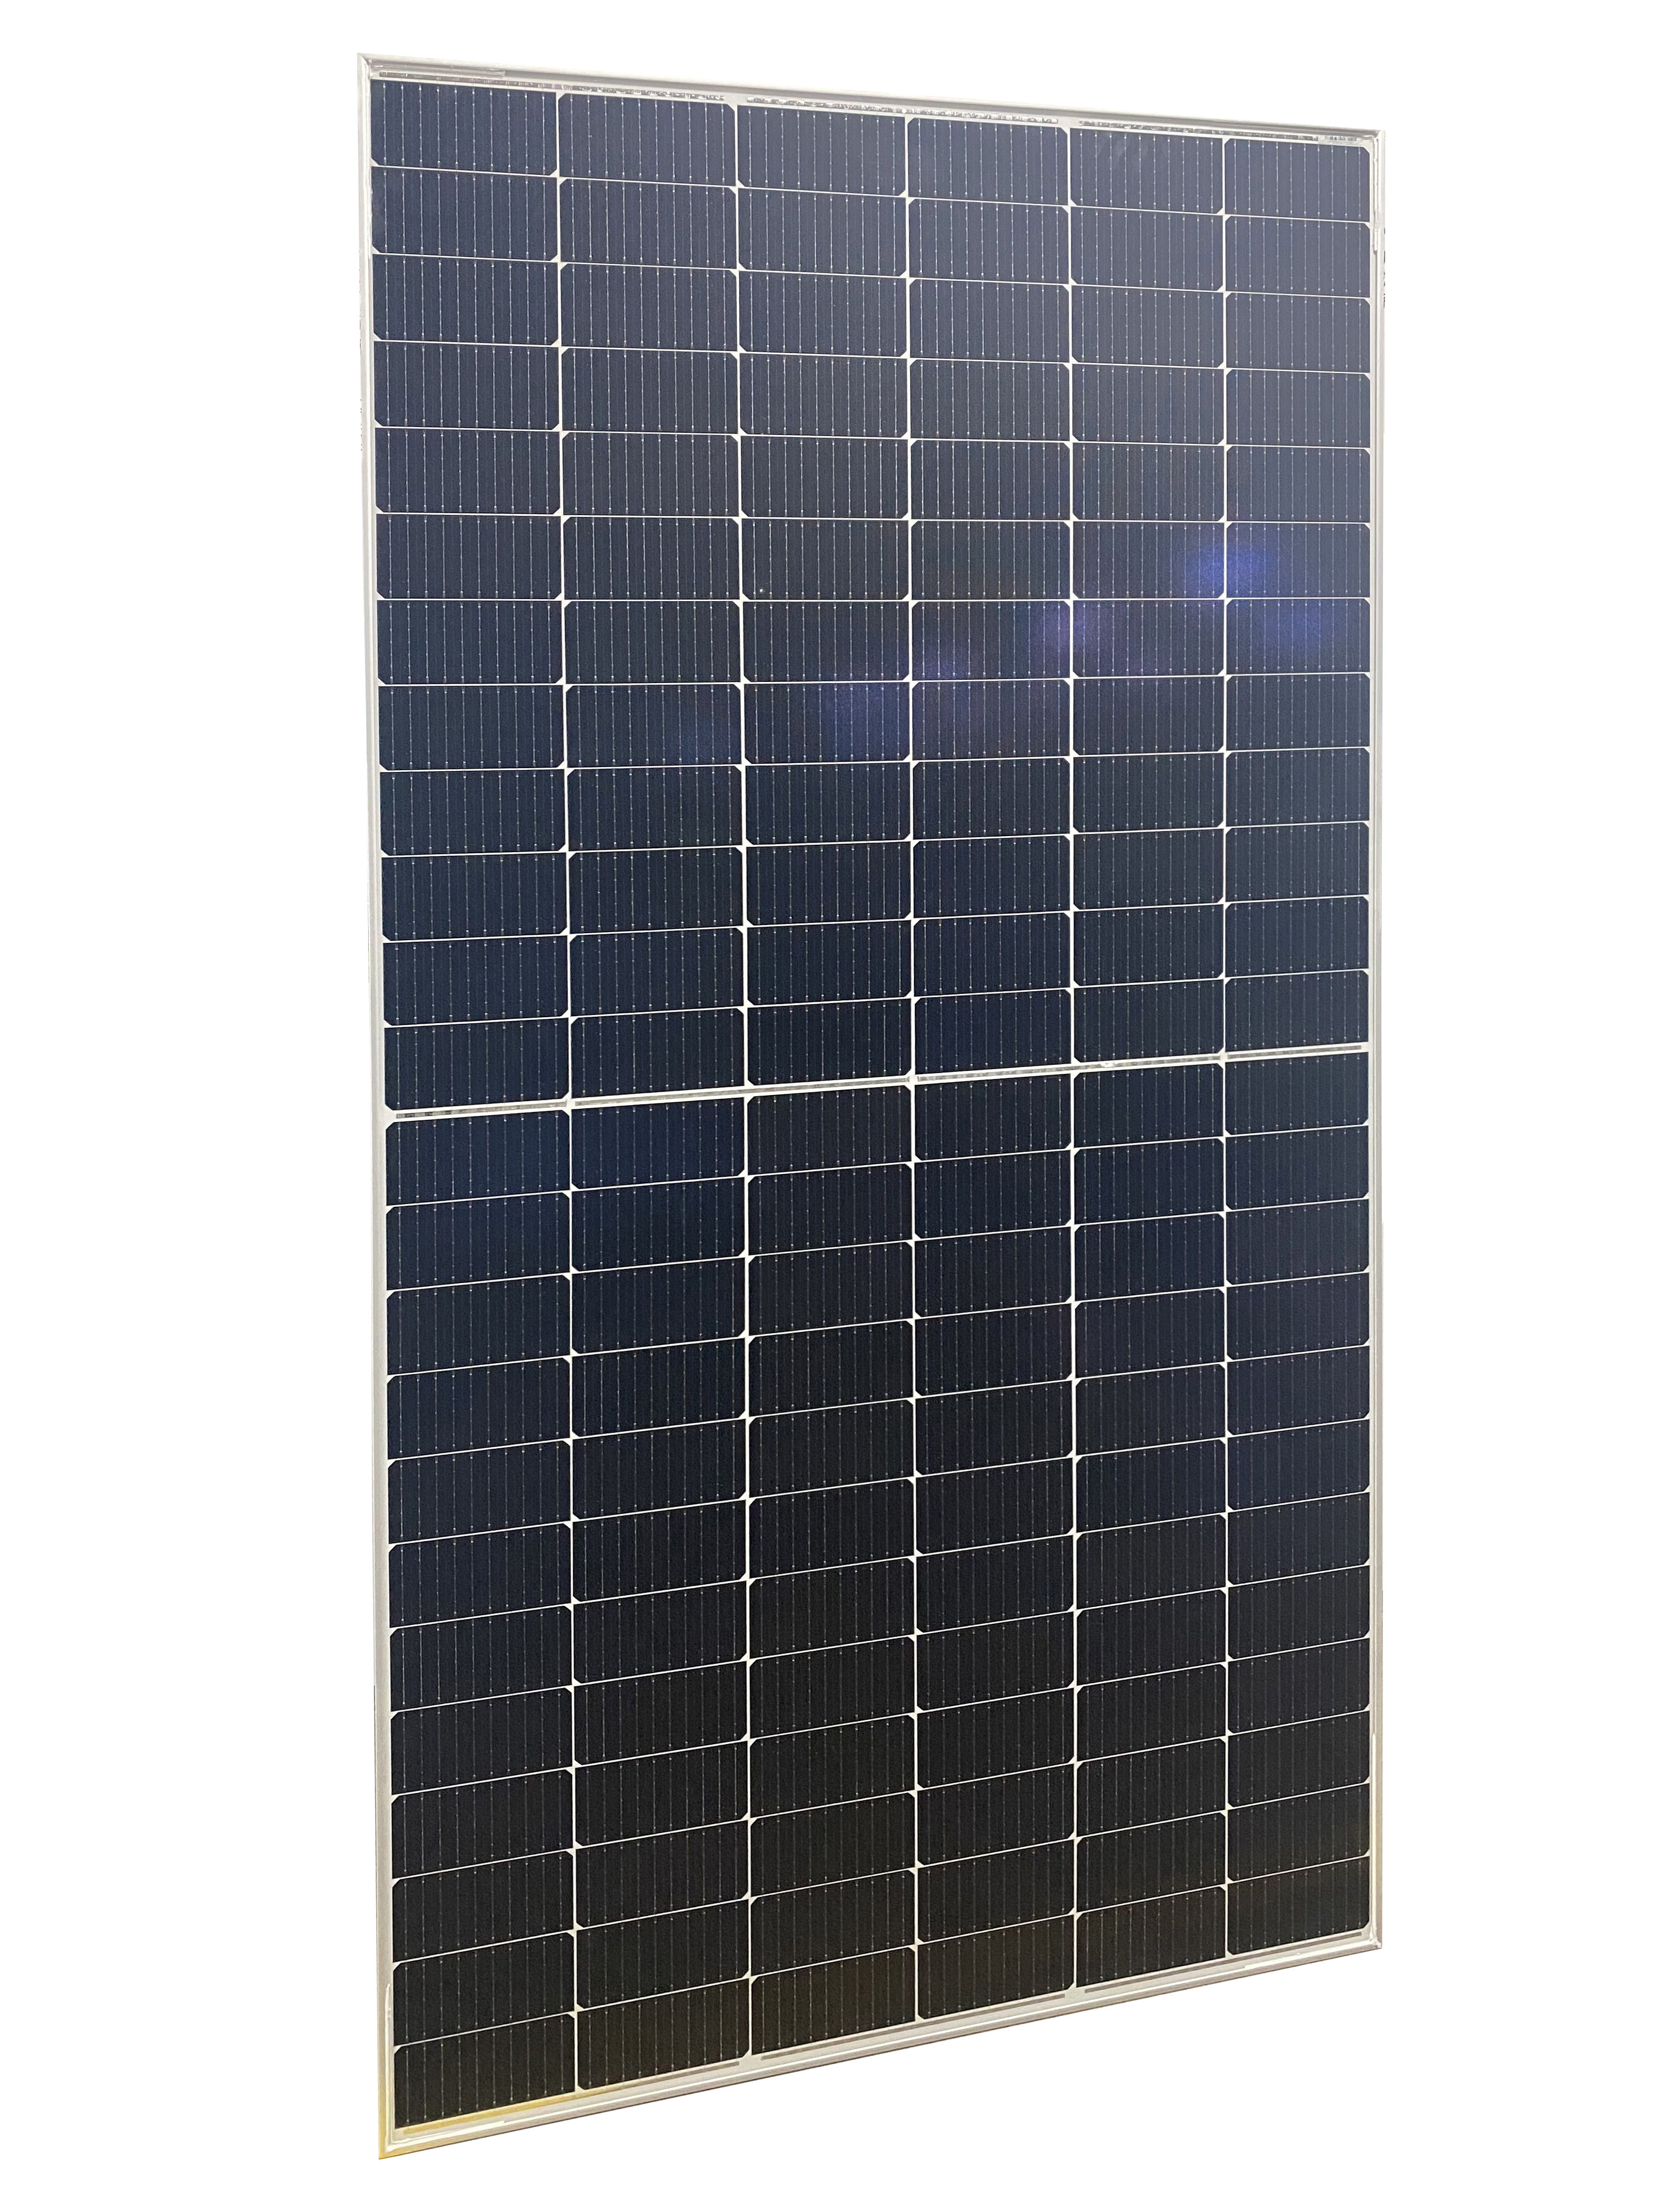 Brightway Solar Half Cell 540 Watt PV Module for Solar Power System